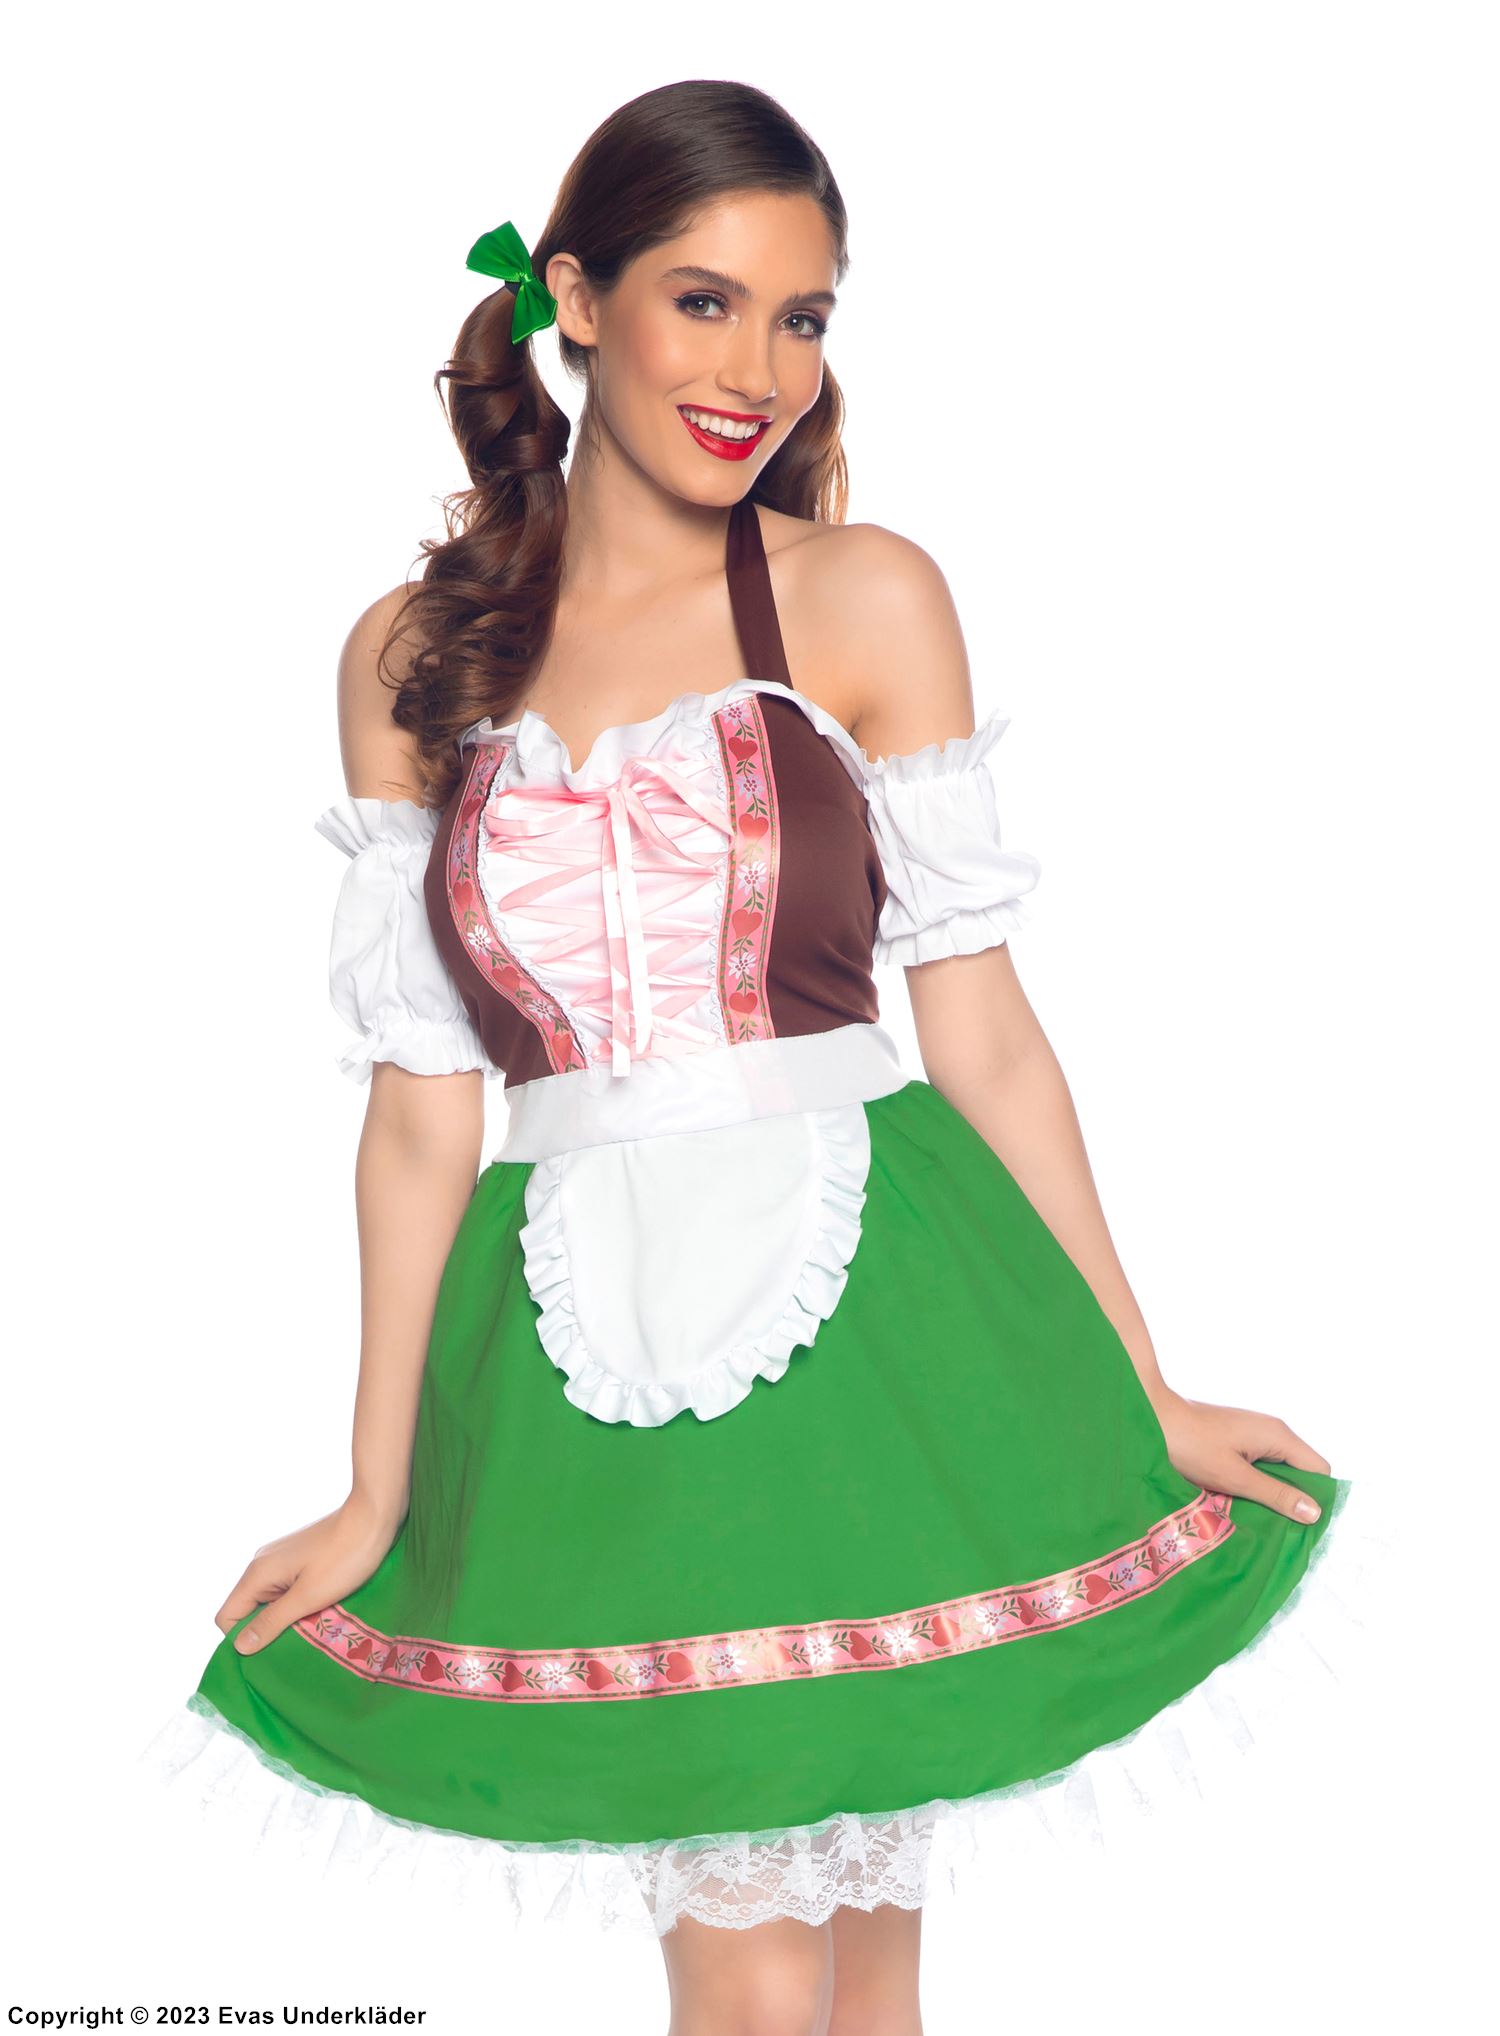 Oktoberfest waitress, costume dress, lacing, off shoulder, apron